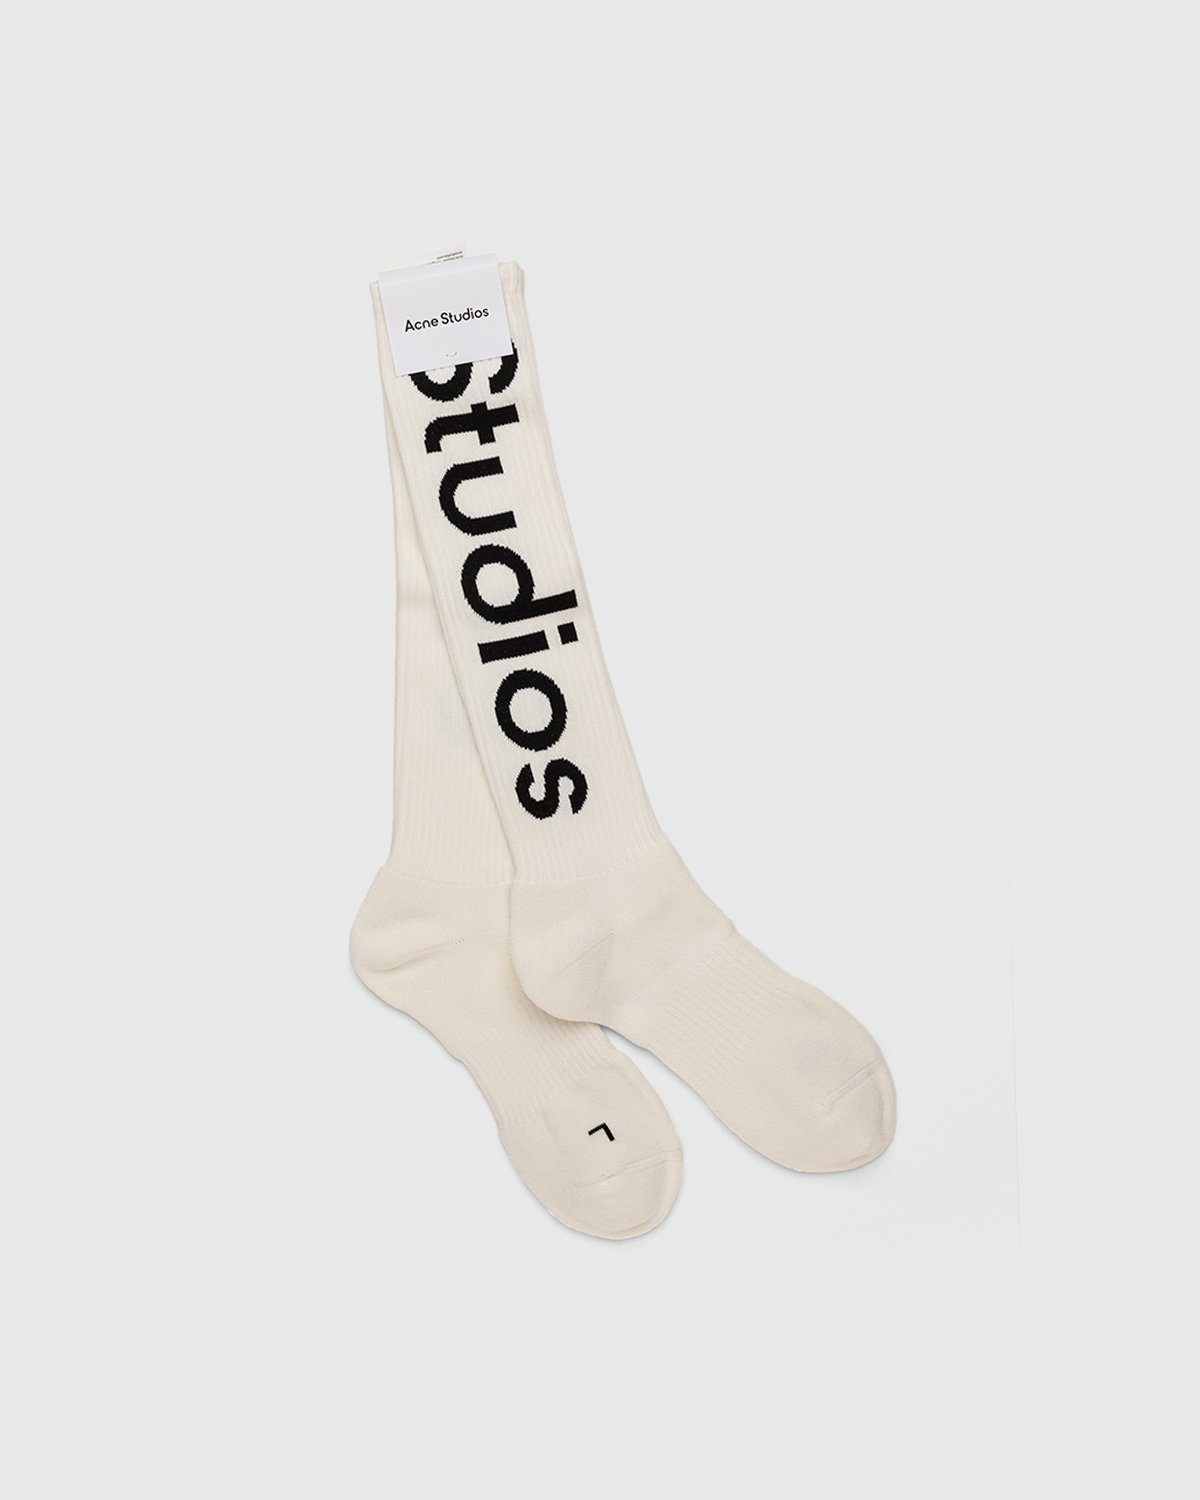 Acne Studios - Logo Socks White - Accessories - White - Image 1